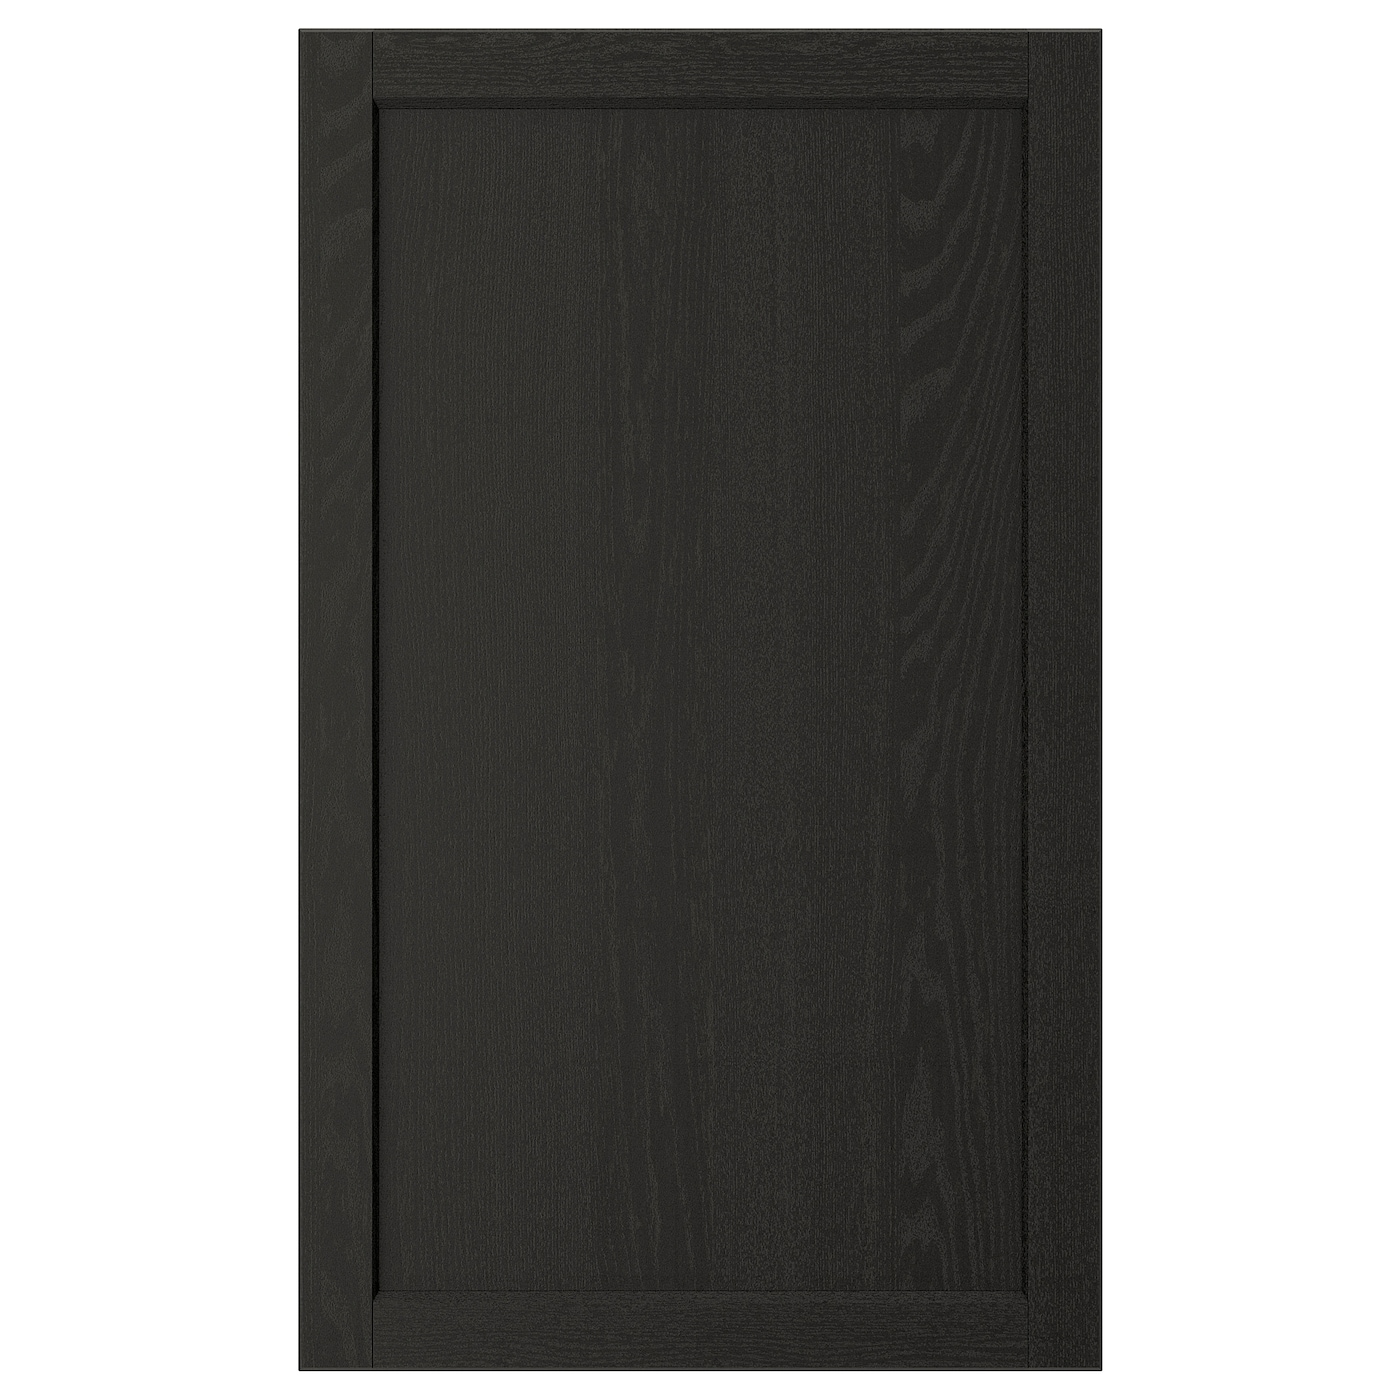 Дверца - IKEA LERHYTTAN, 100х60 см, черный, ЛЕРХЮТТАН ИКЕА